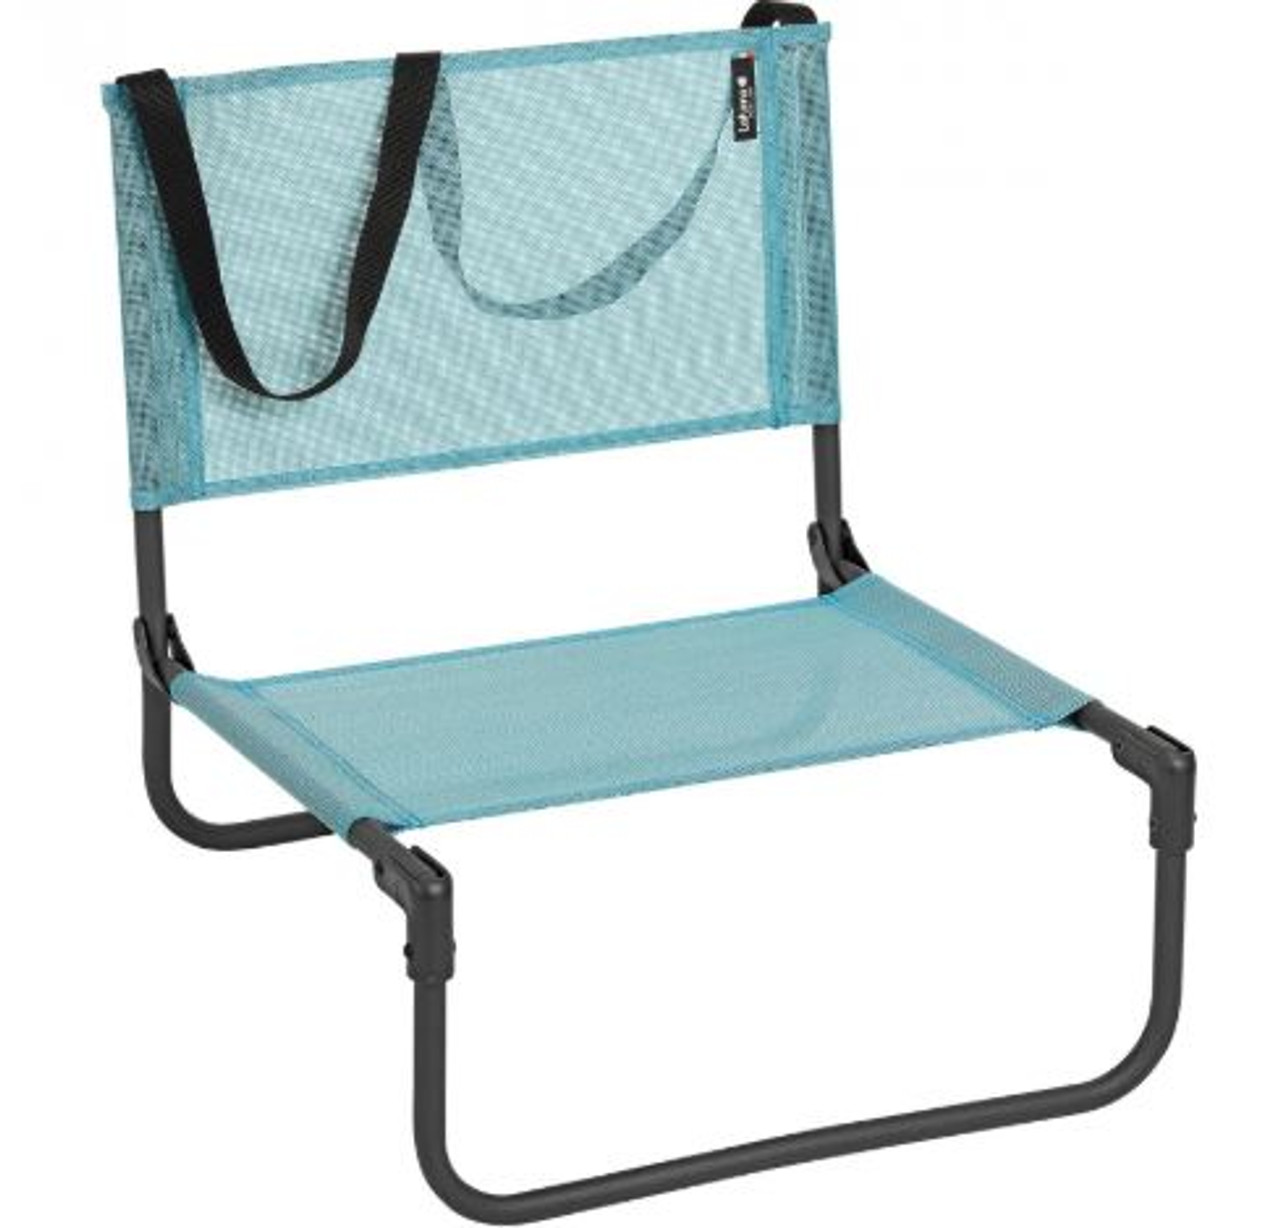 Lafuma® CB Low Event Chair w/ Strap

Swatch-Lake